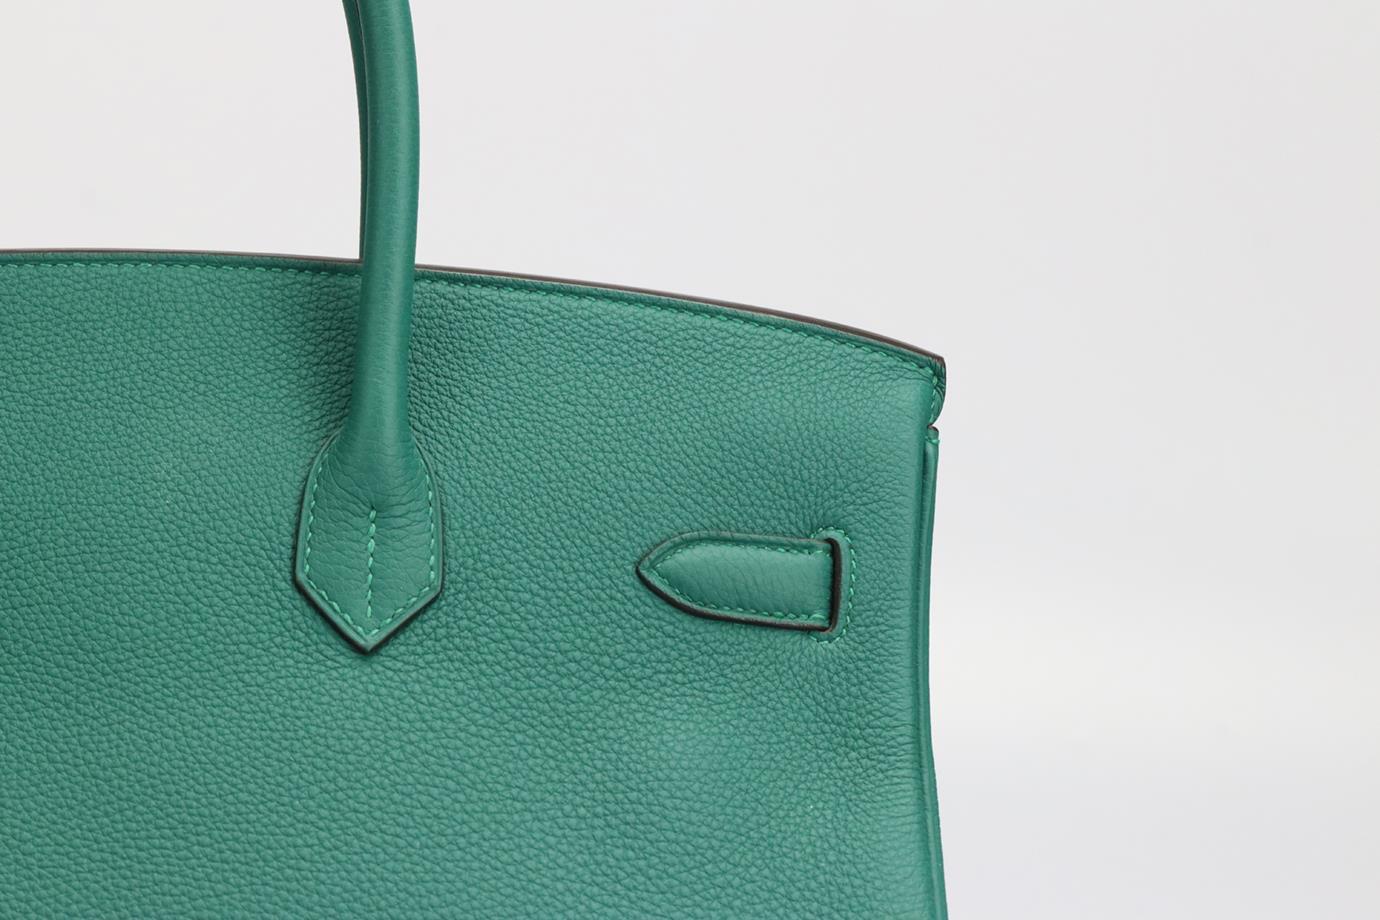 Hermès 2013 Birkin 35cm Maurice Leather Bag For Sale 3